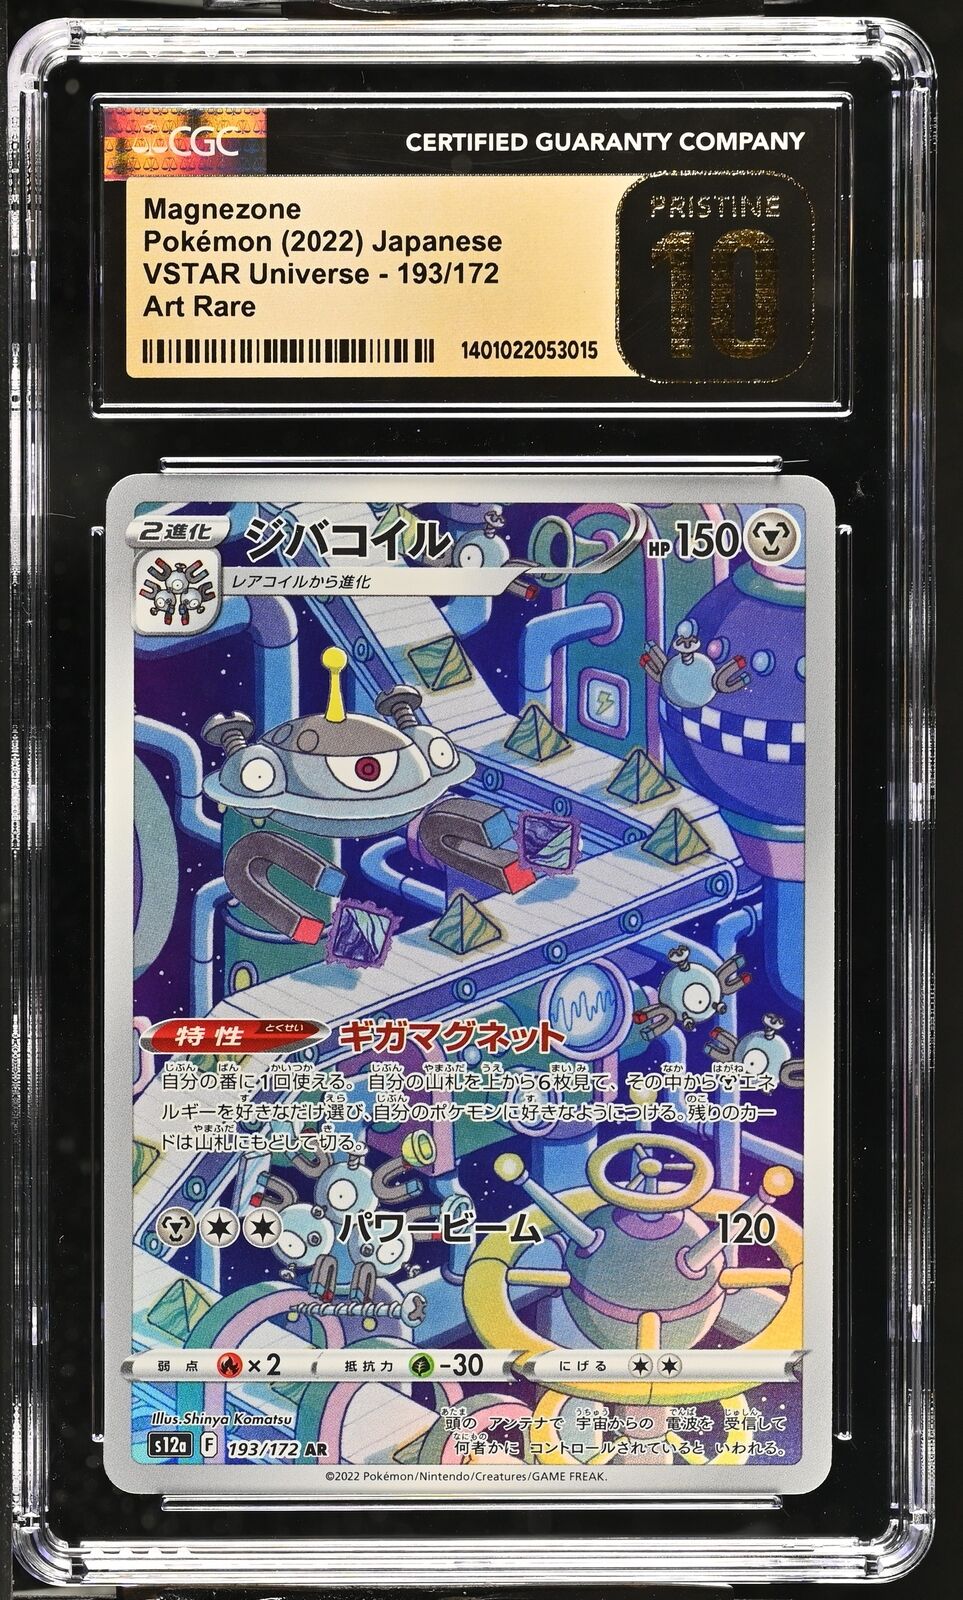 CGC 10 PRISTINE Japanese Pokémon 2022 Magnezone 193/172 S12a Art Rare